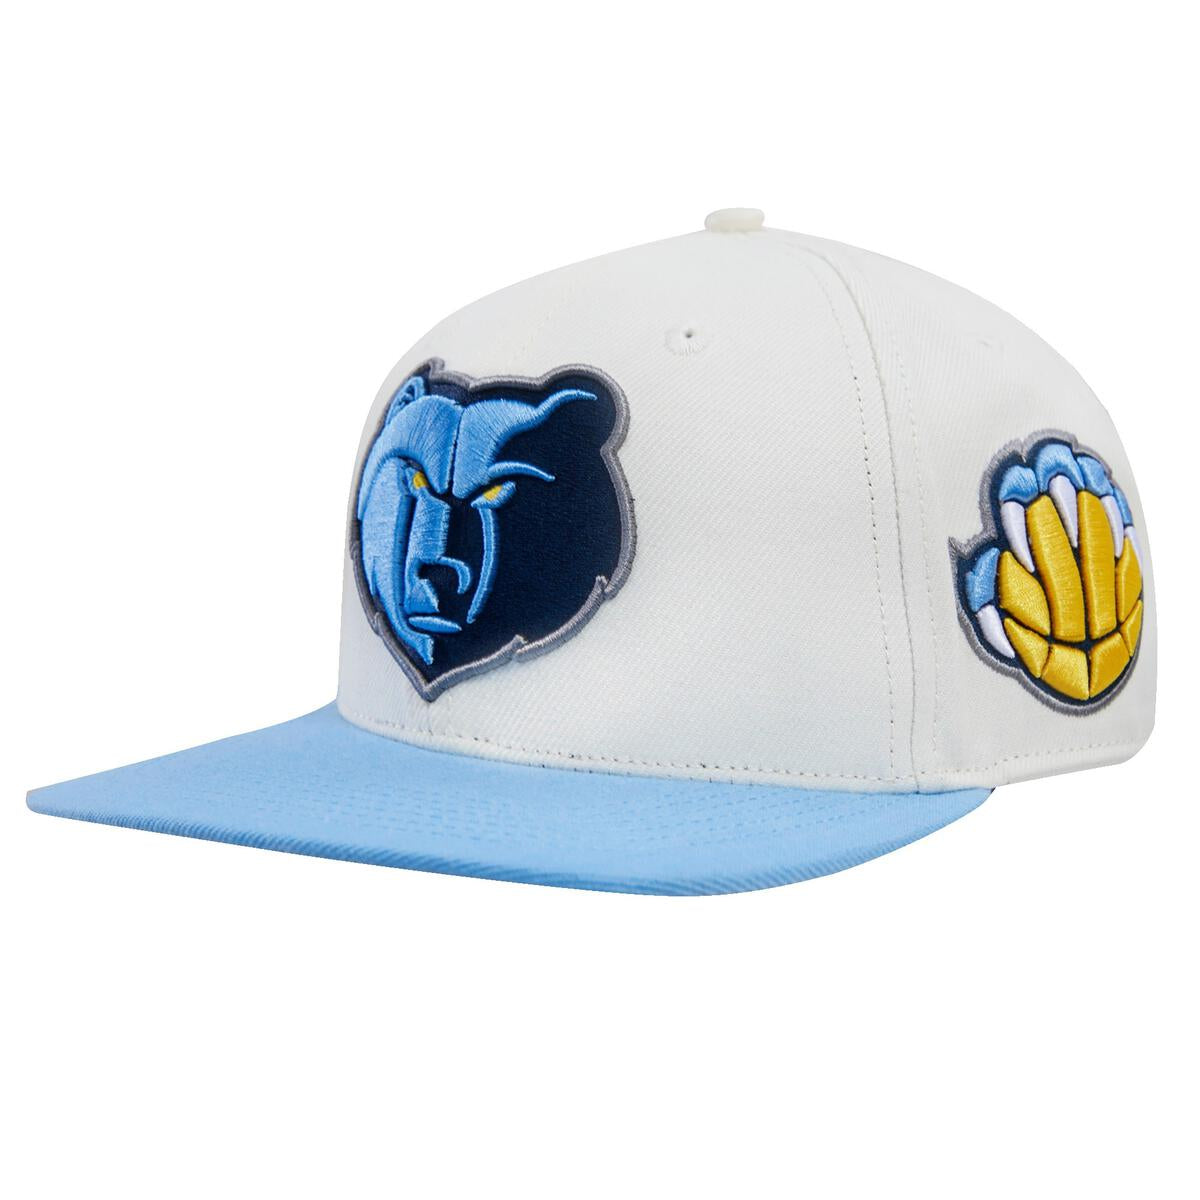 Pro Standard - Memphis Grizzlies Retro Classic Snapback Hat - Light Blue